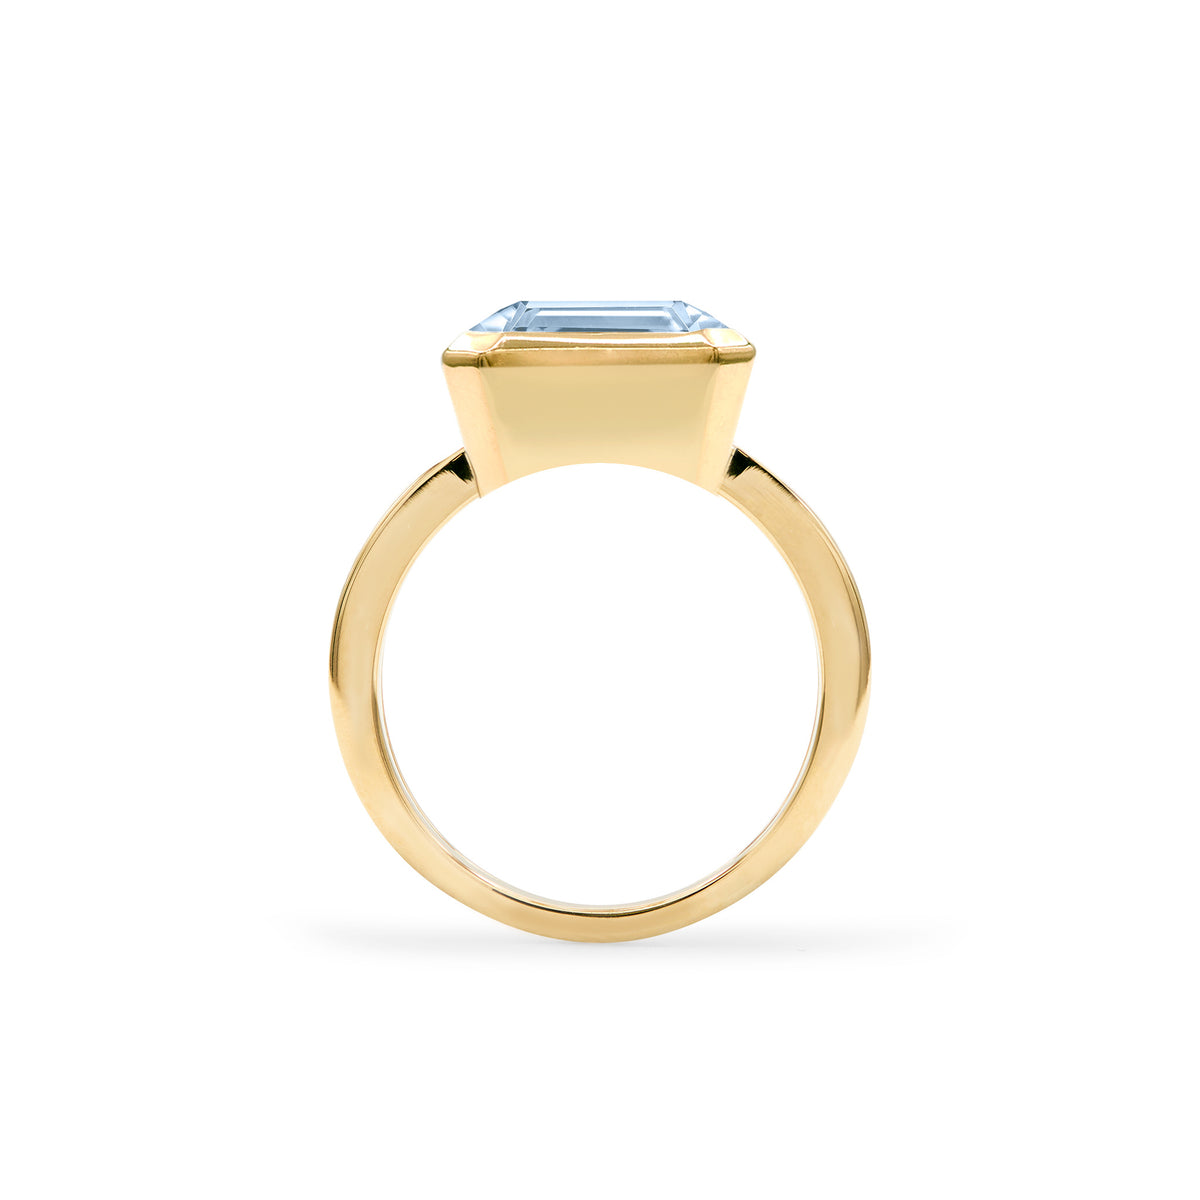 Warren Aquamarine Ring in 14K Yellow Gold